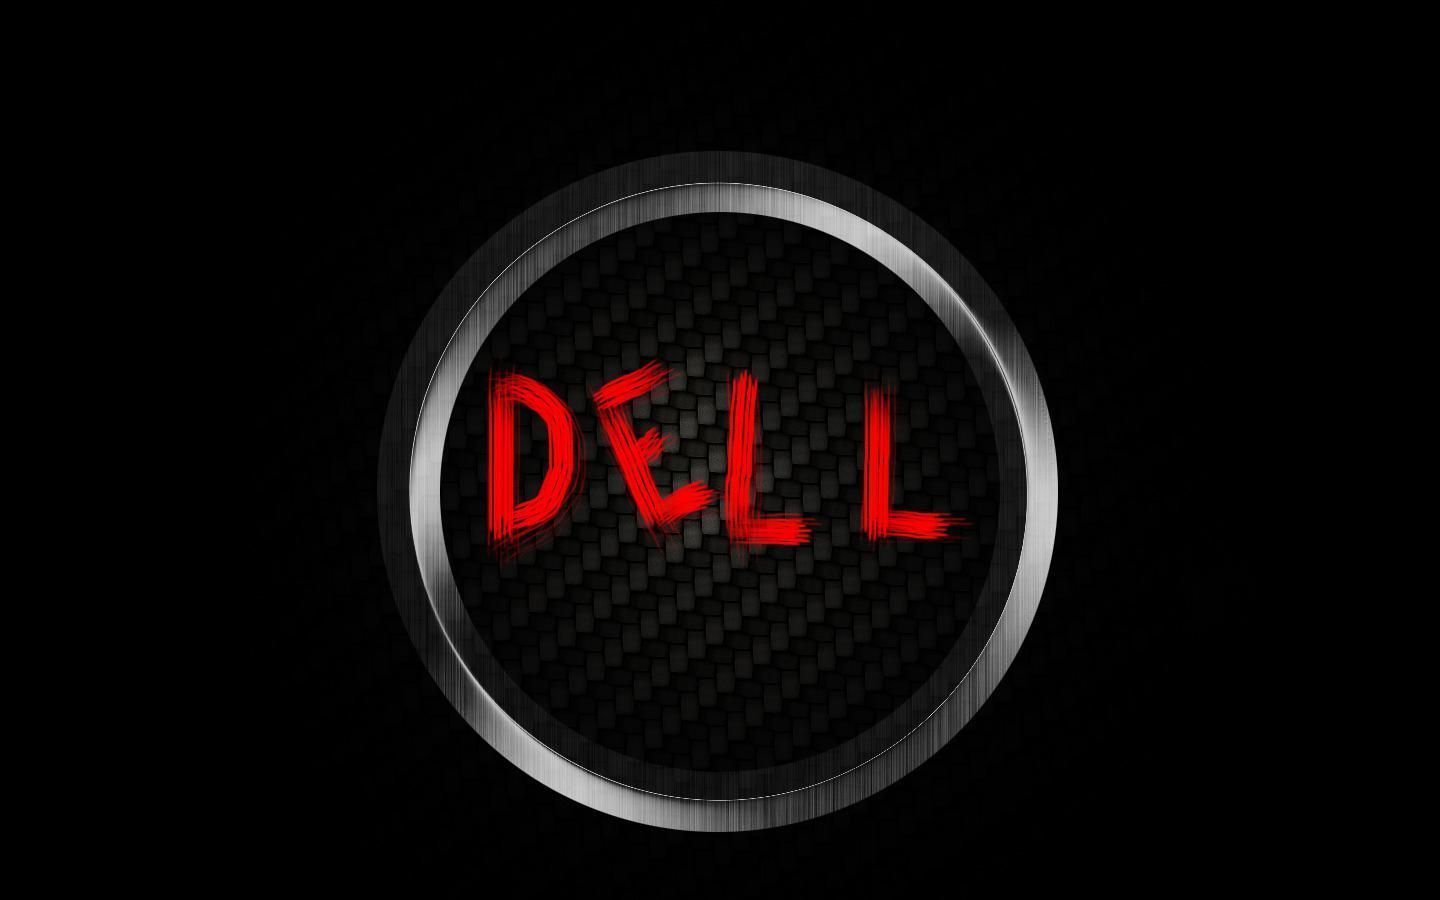 Dell HD Wallpaper, get it now